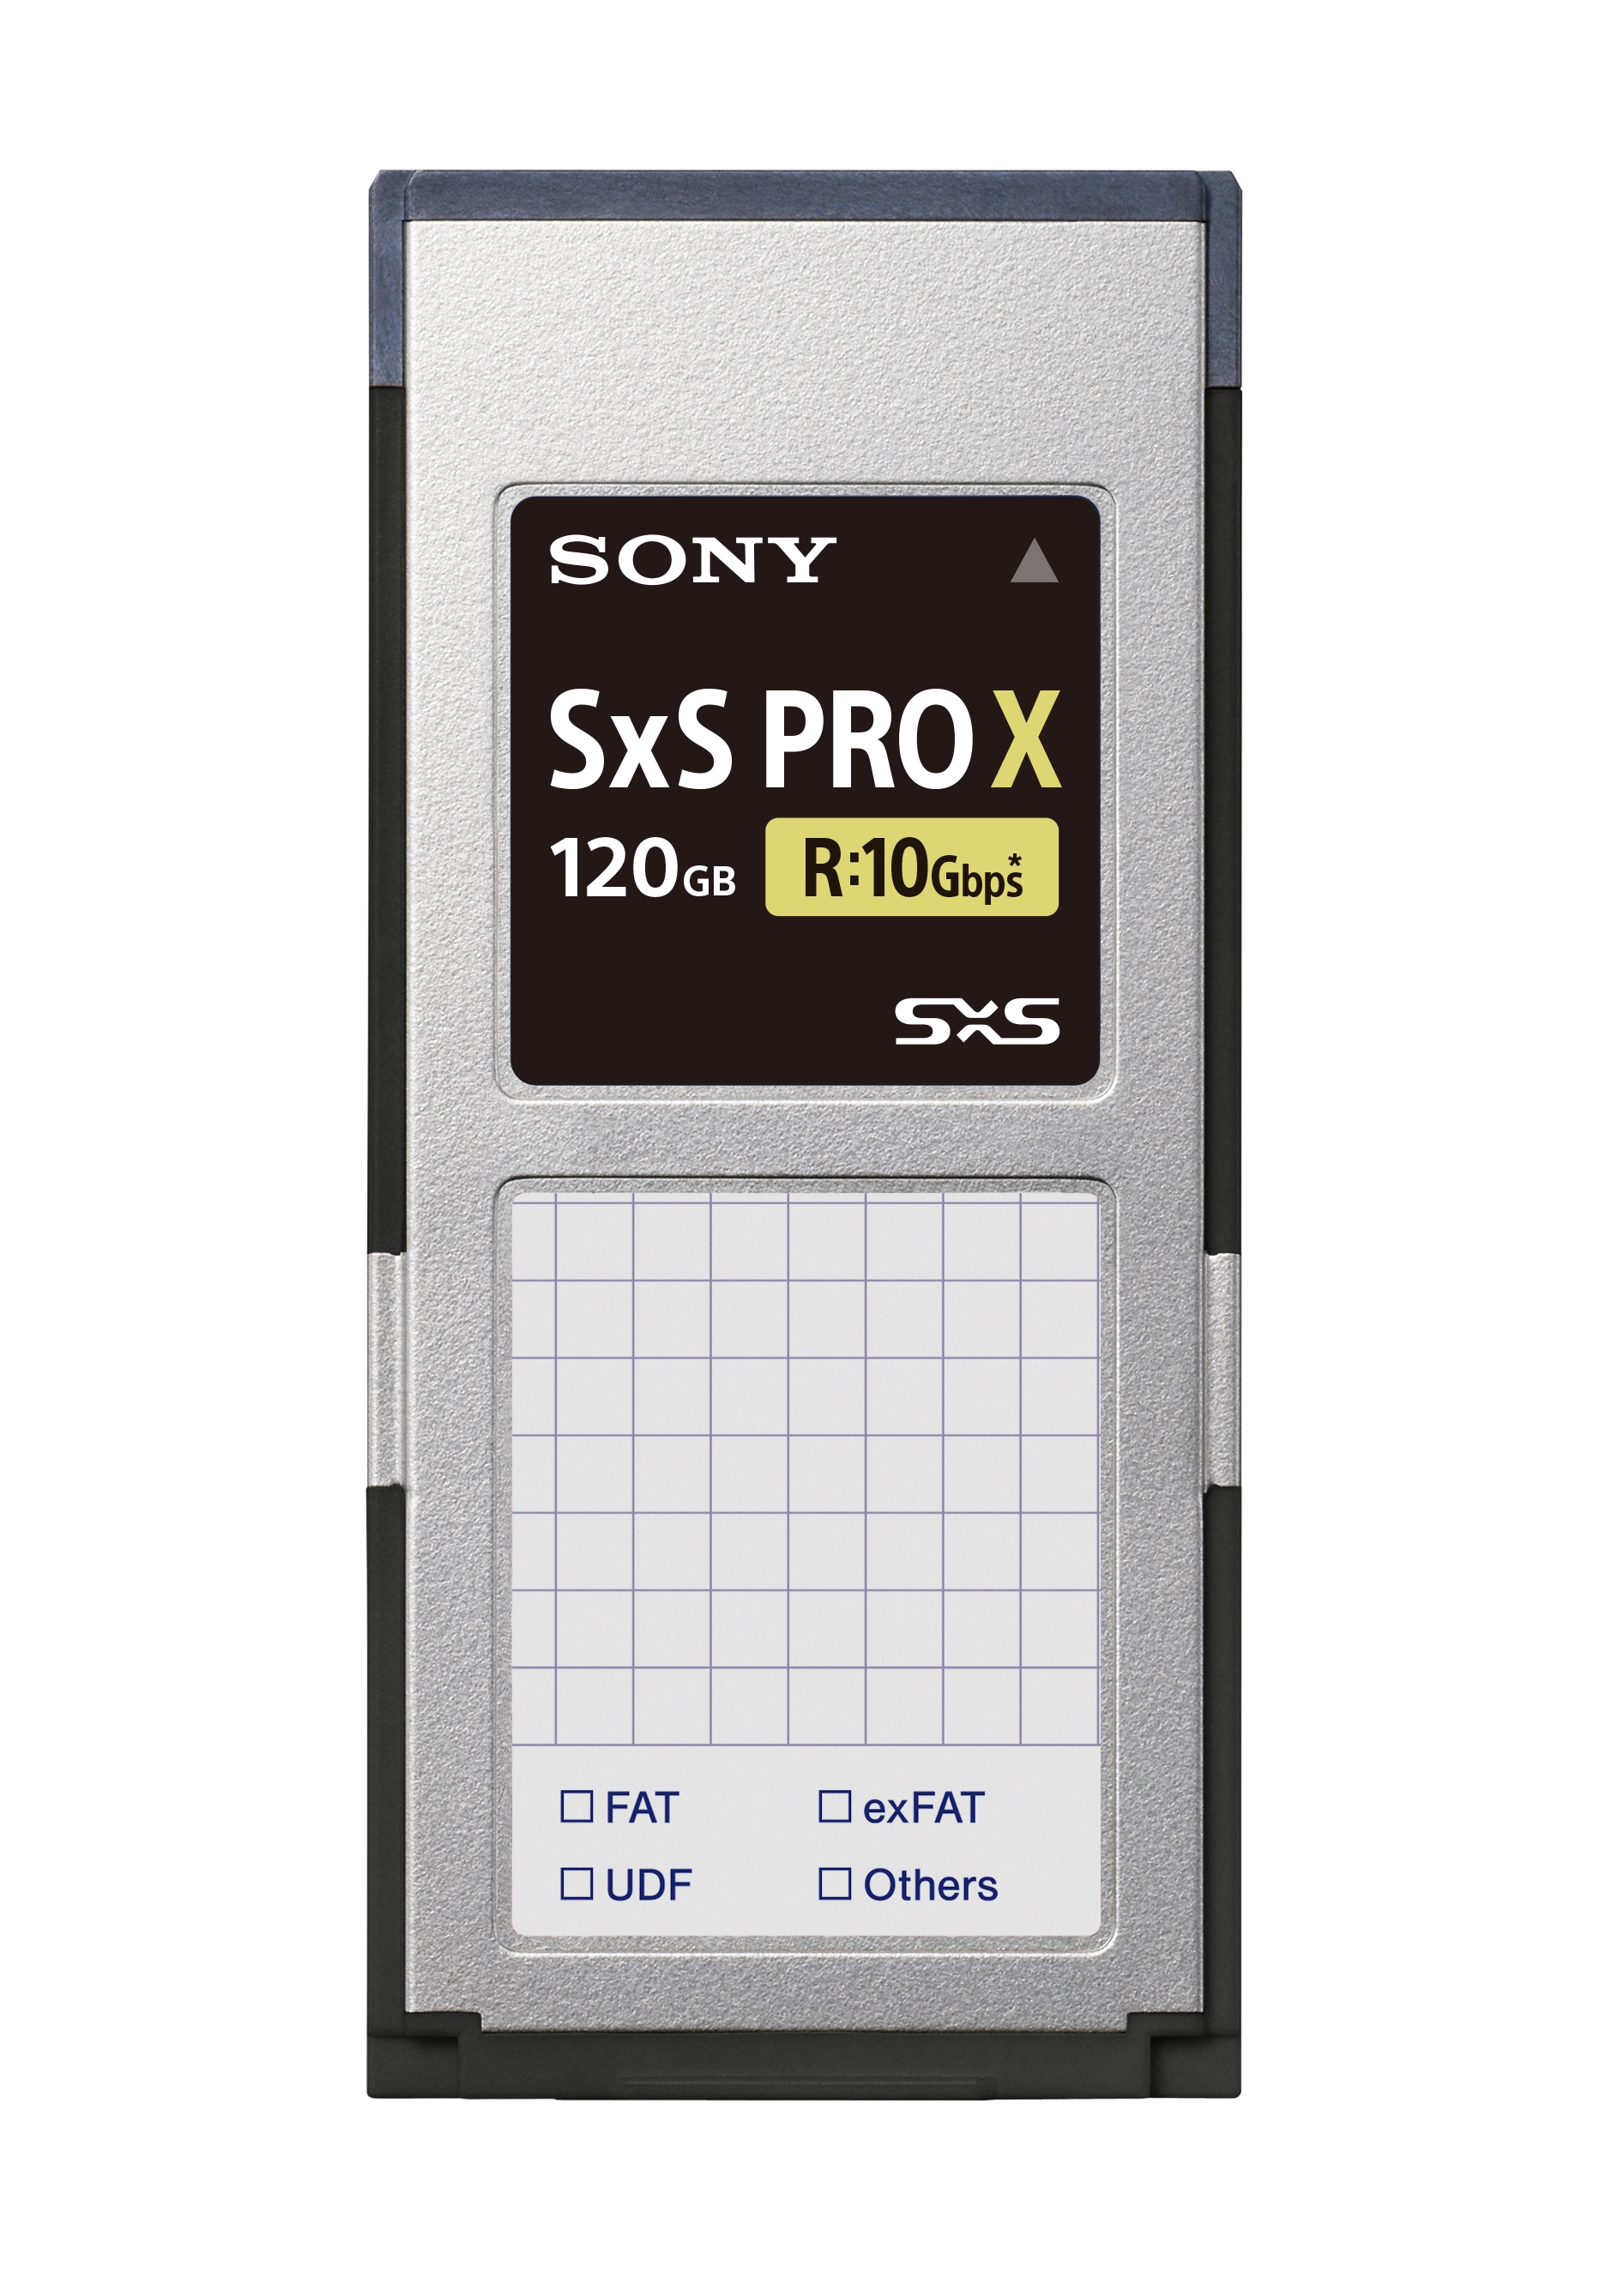 Sony Professional SxS Pro-X Memory Card 120Gb - Successor of SBP-120F Copy